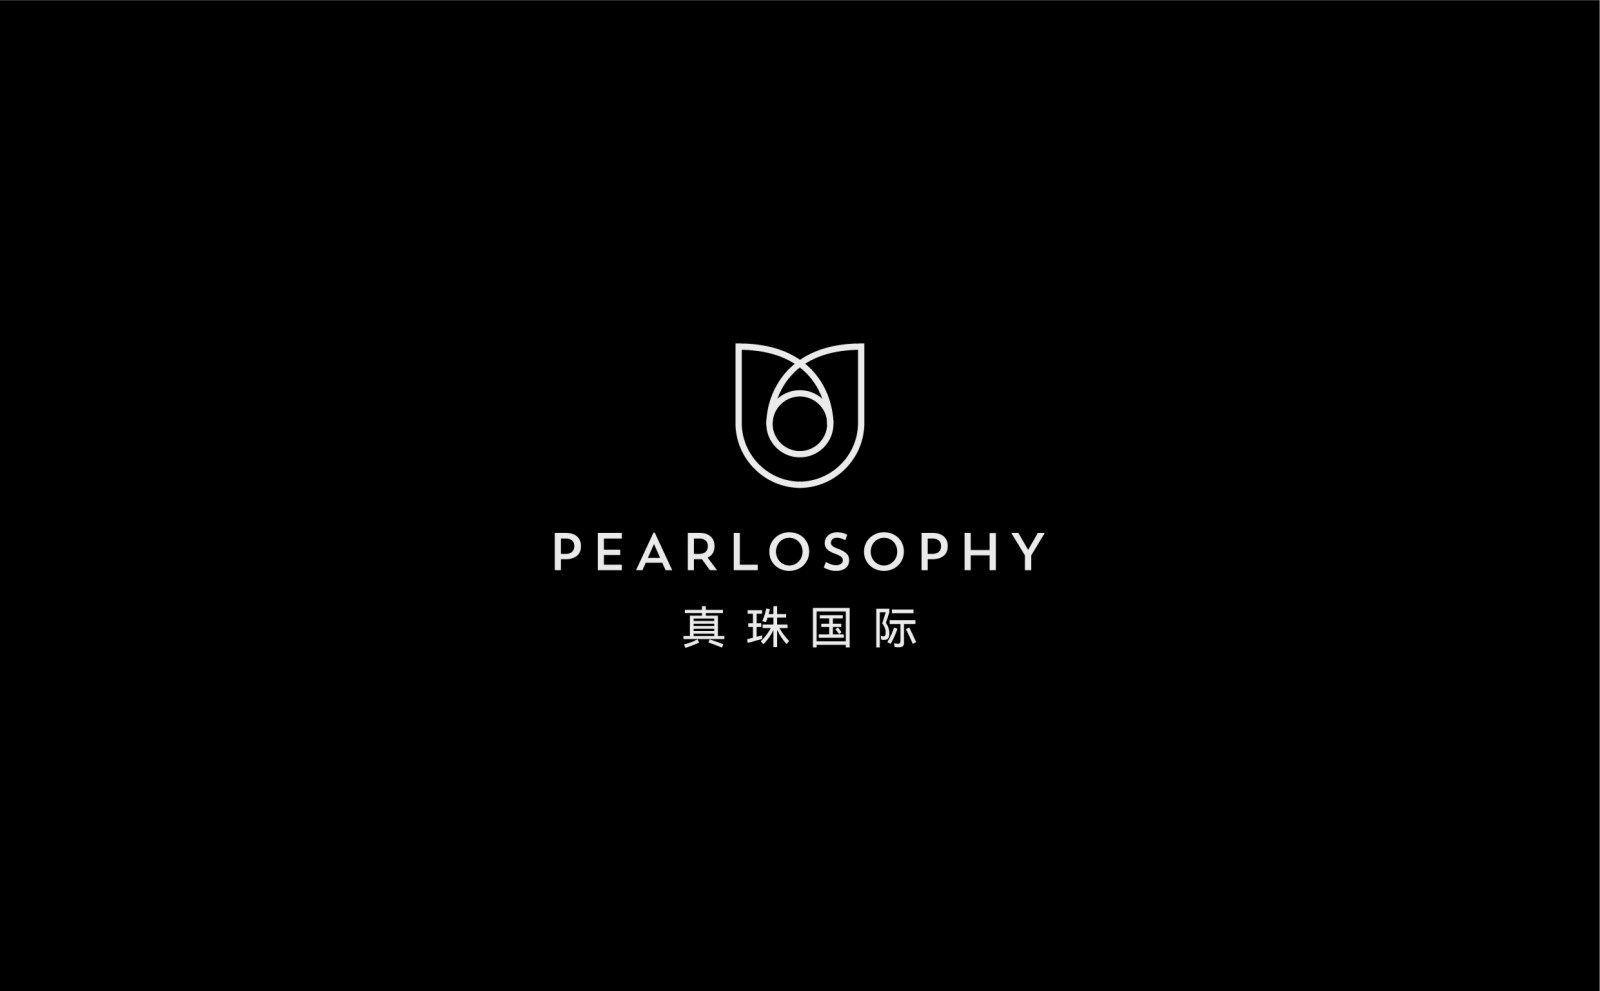 PEARLOSOPHY 真珠国际